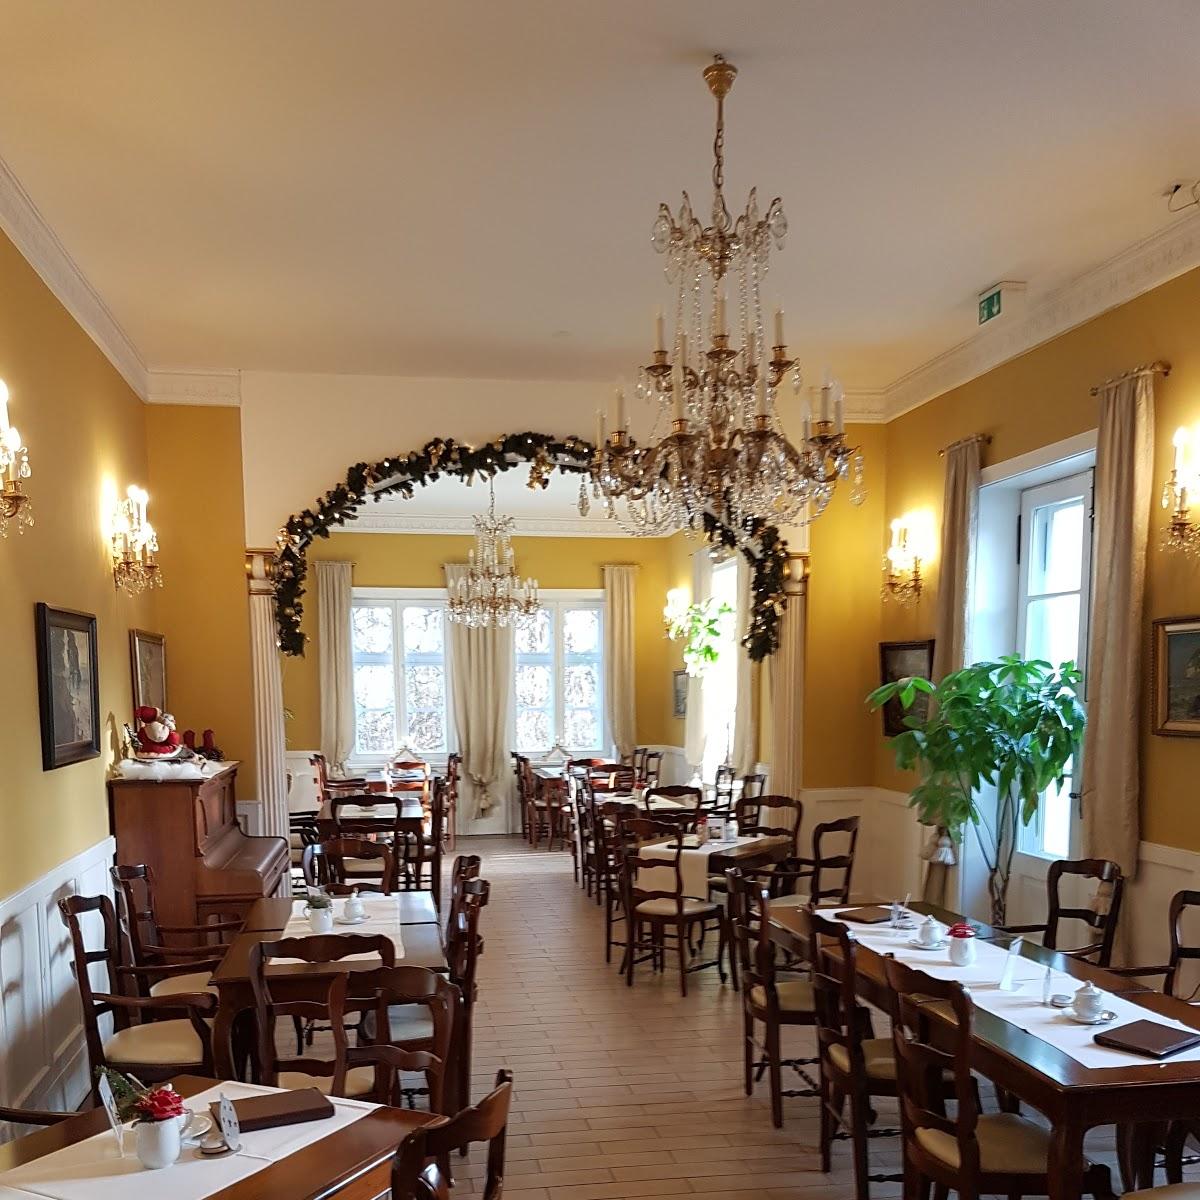 Restaurant "Rosencafé , Kurimmobilien Raulff oHG" in Putbus